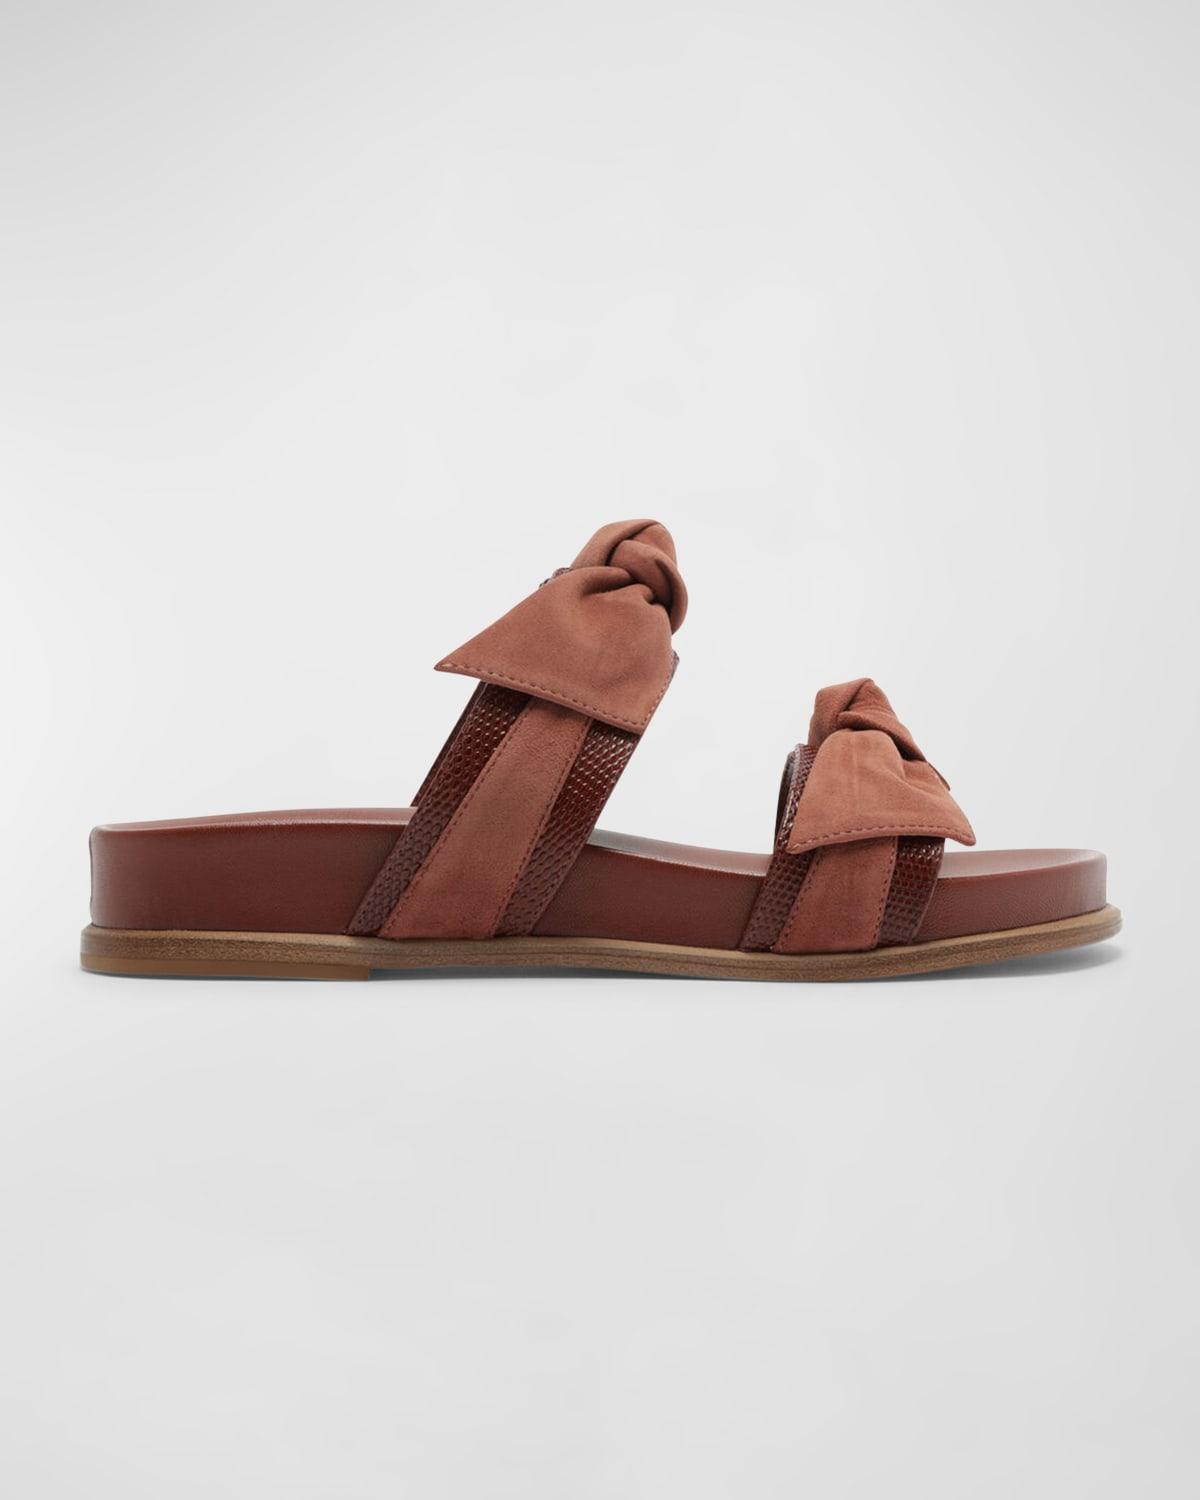 Maxi Clarita Dual Knot Slide Sandals Product Image